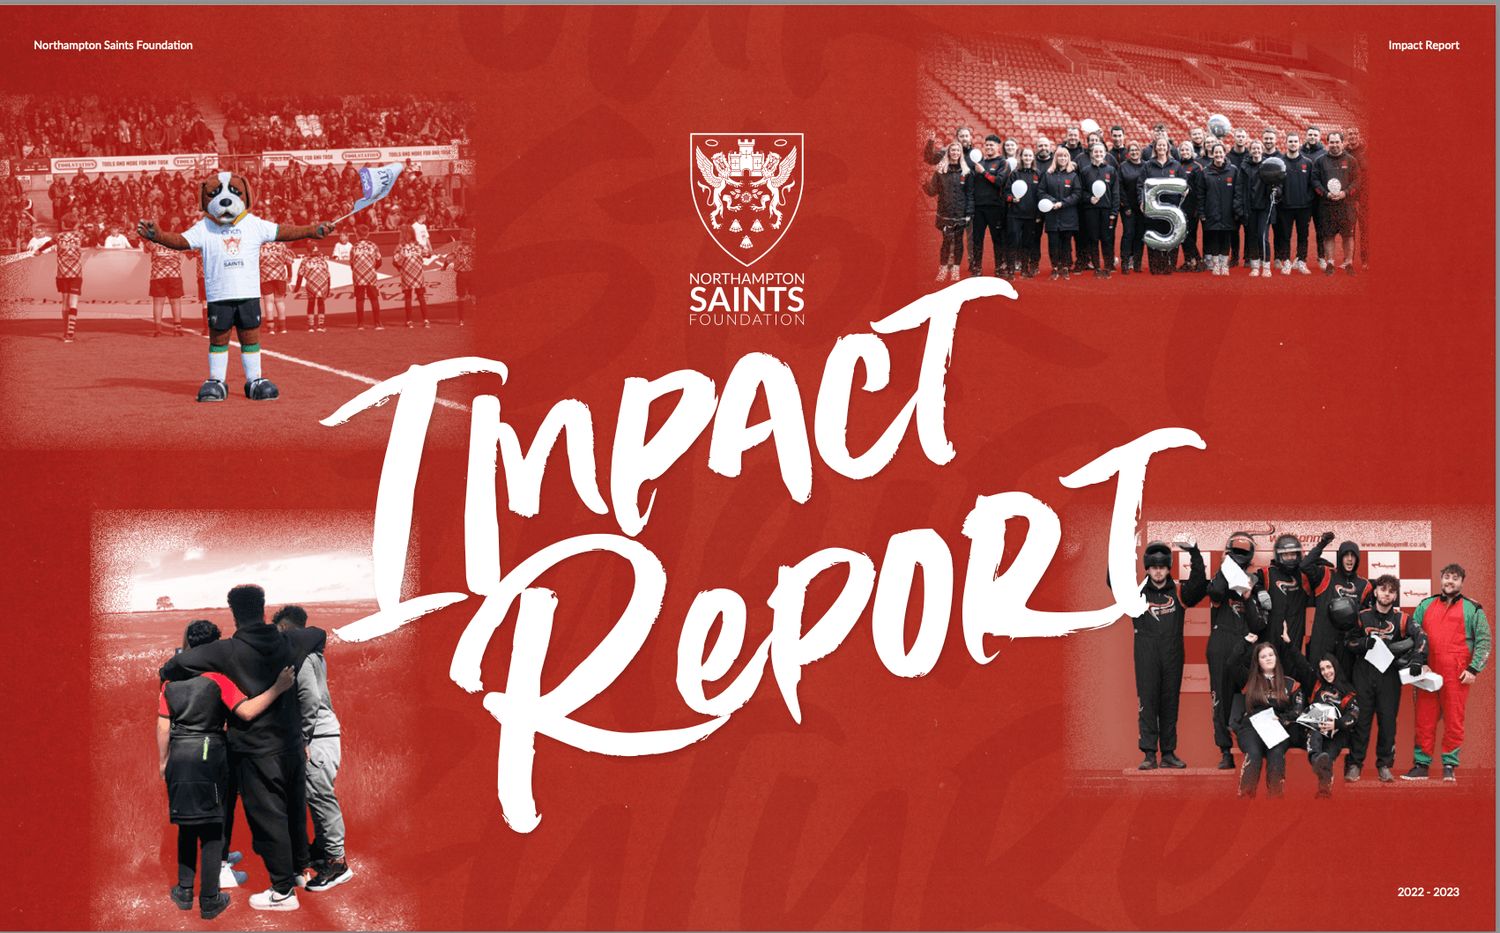 Impact report 2022/23